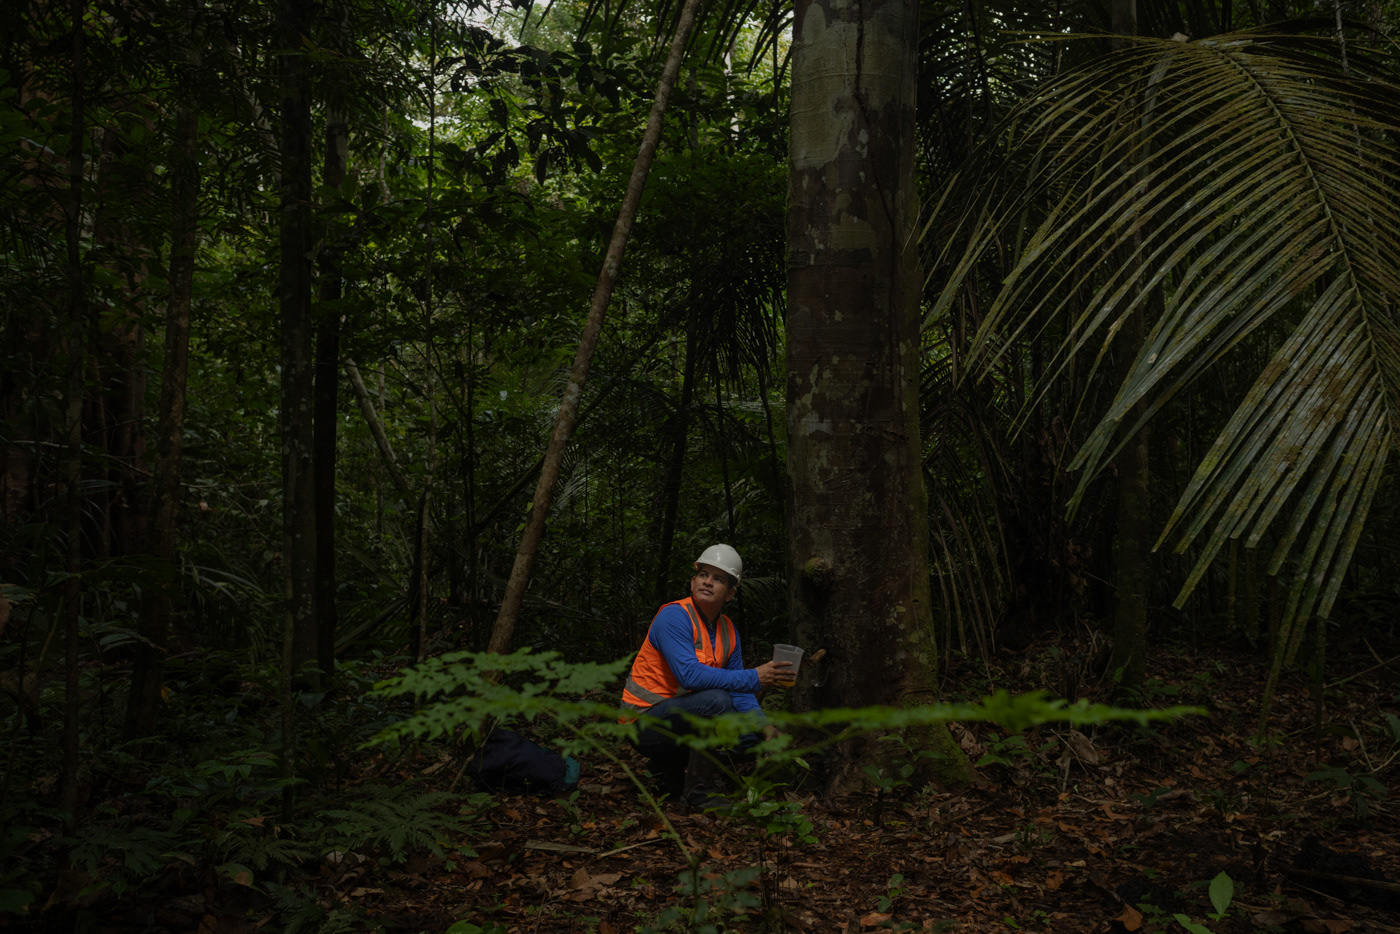 Amazon Amazon Product rainforest people climate change environment global warming Reforestation forest Sustainability